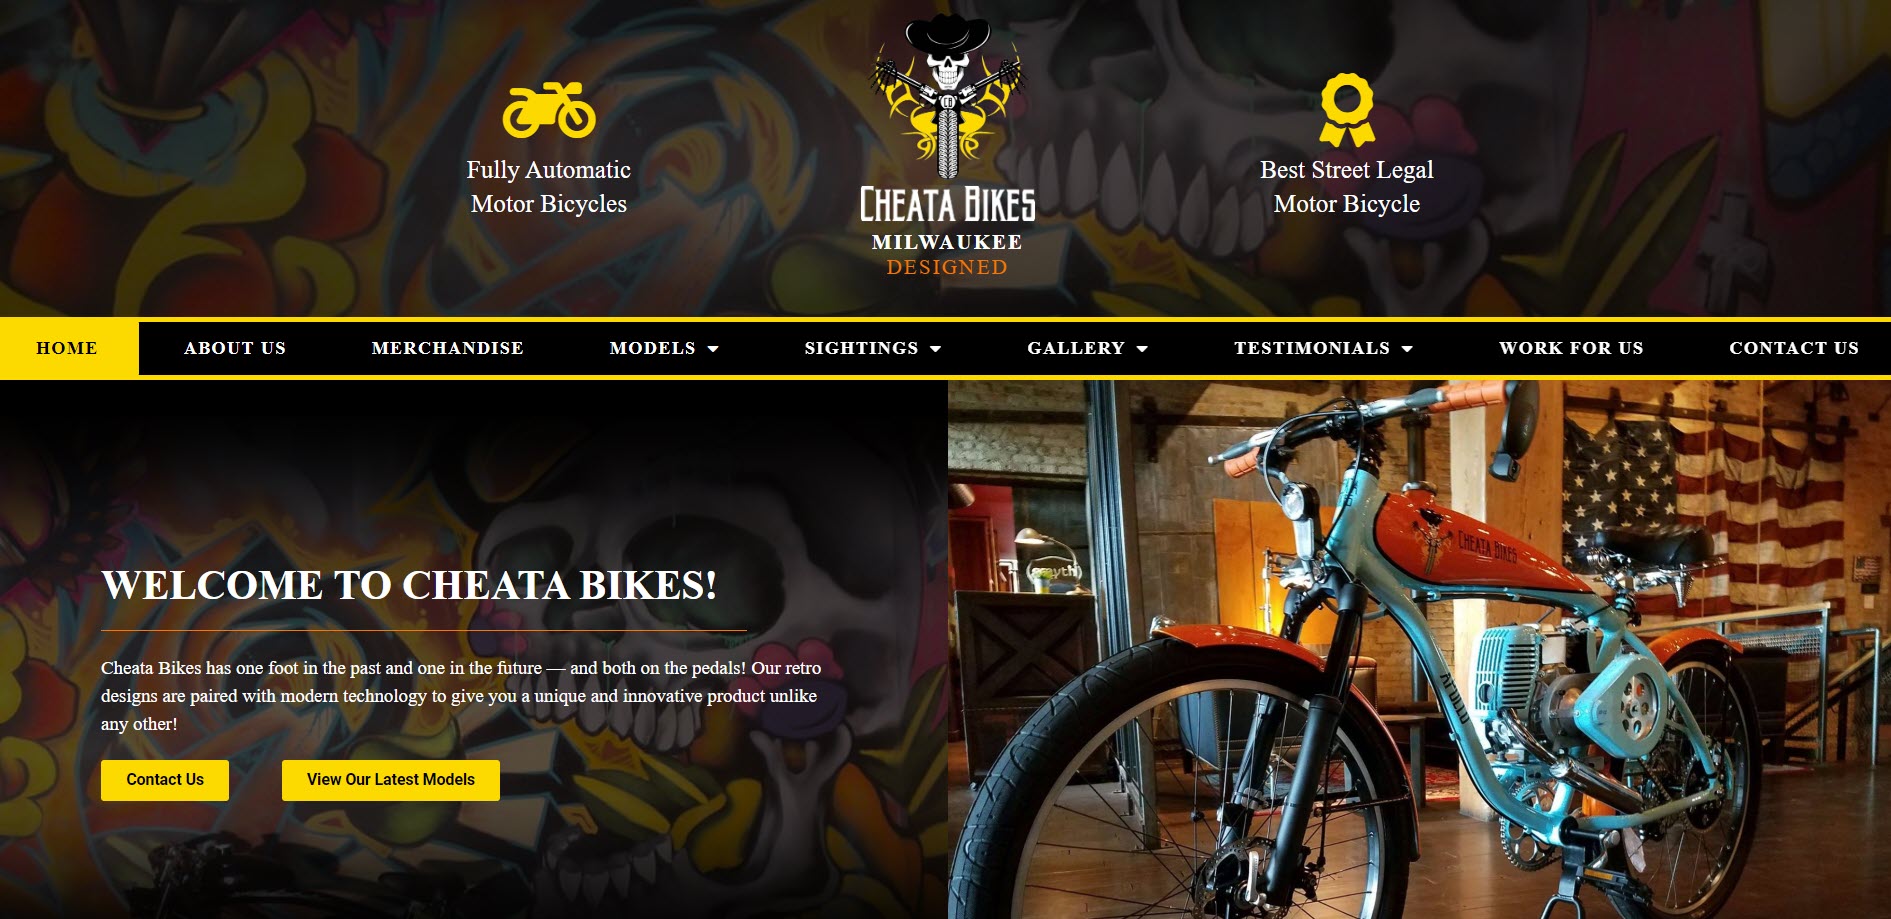 Cheata Bikes Motor Bicycles